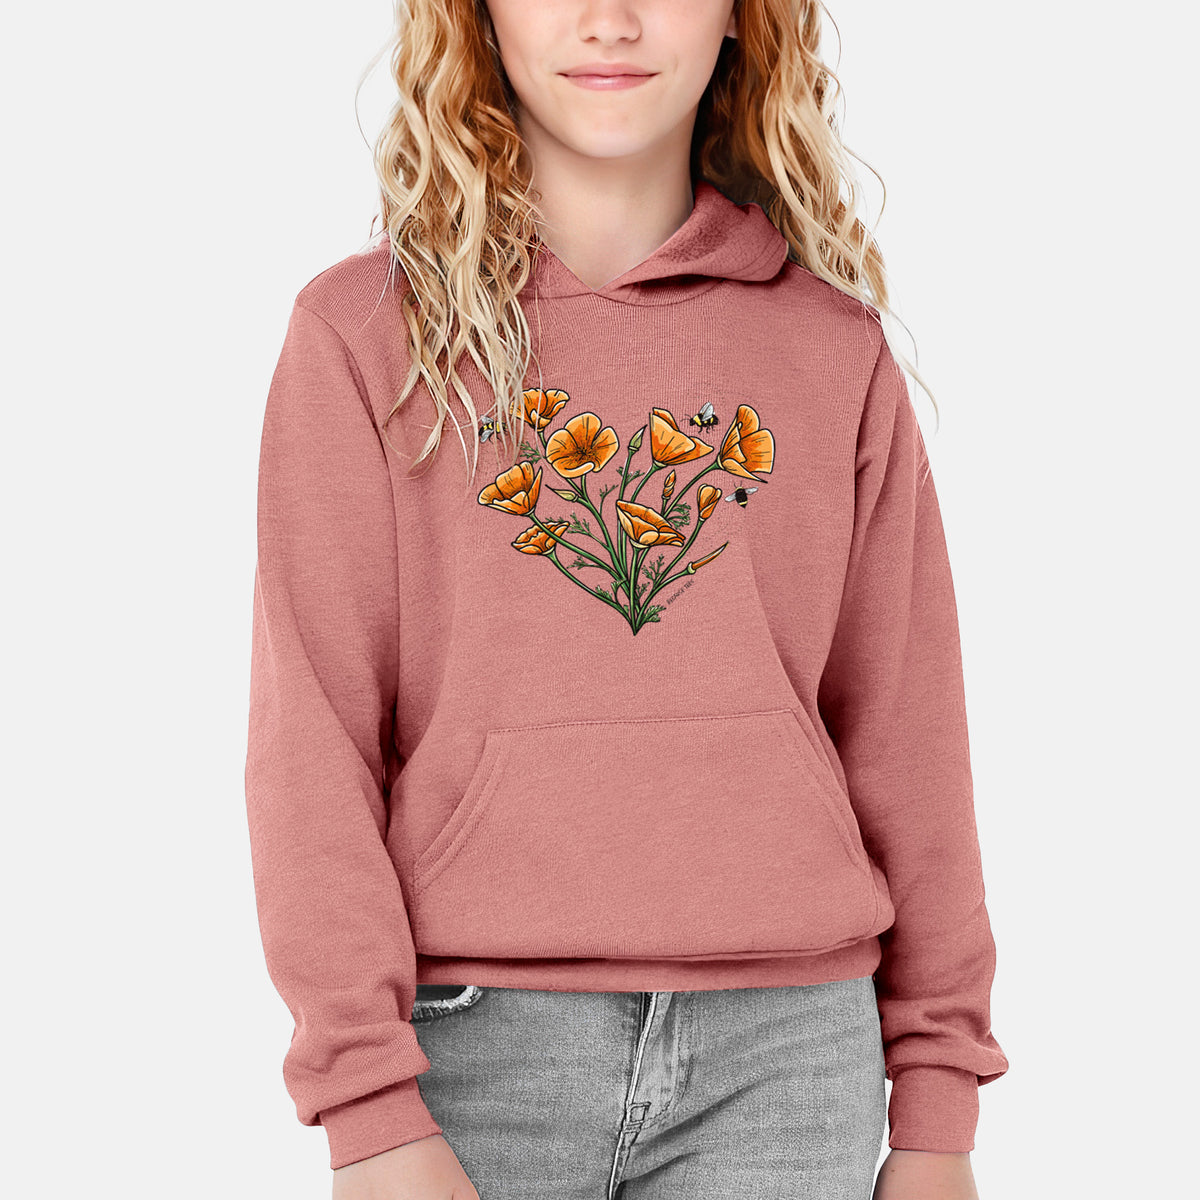 Color California Poppy Heart - Youth Hoodie Sweatshirt